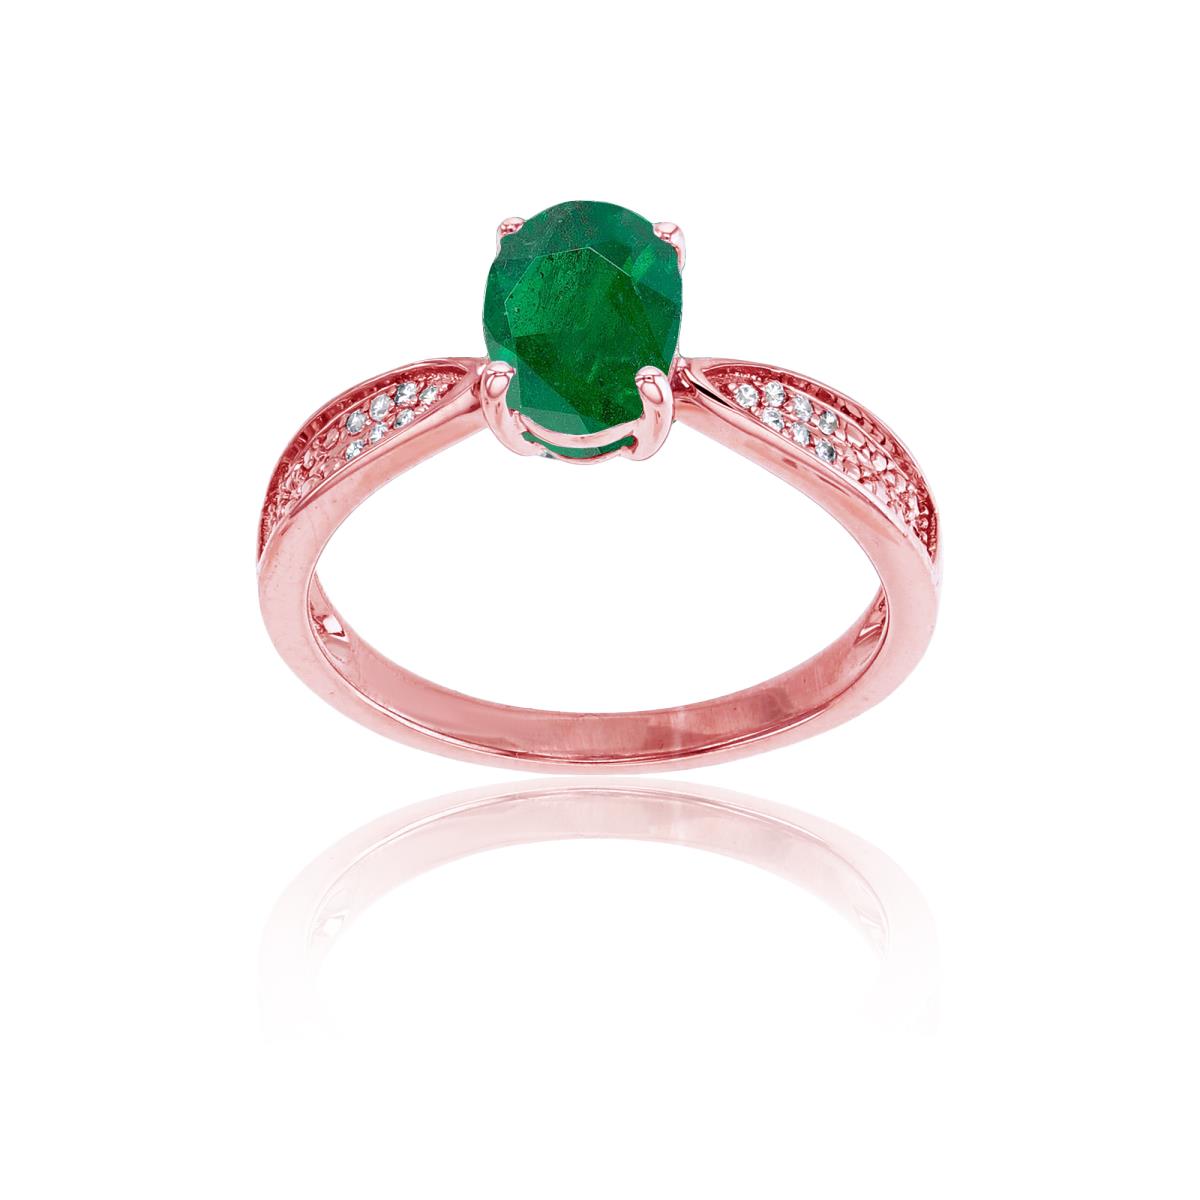 10K Rose Gold 0.05 CTTW Rnd Diamond & 8x6mm Oval Emerald Center Ring